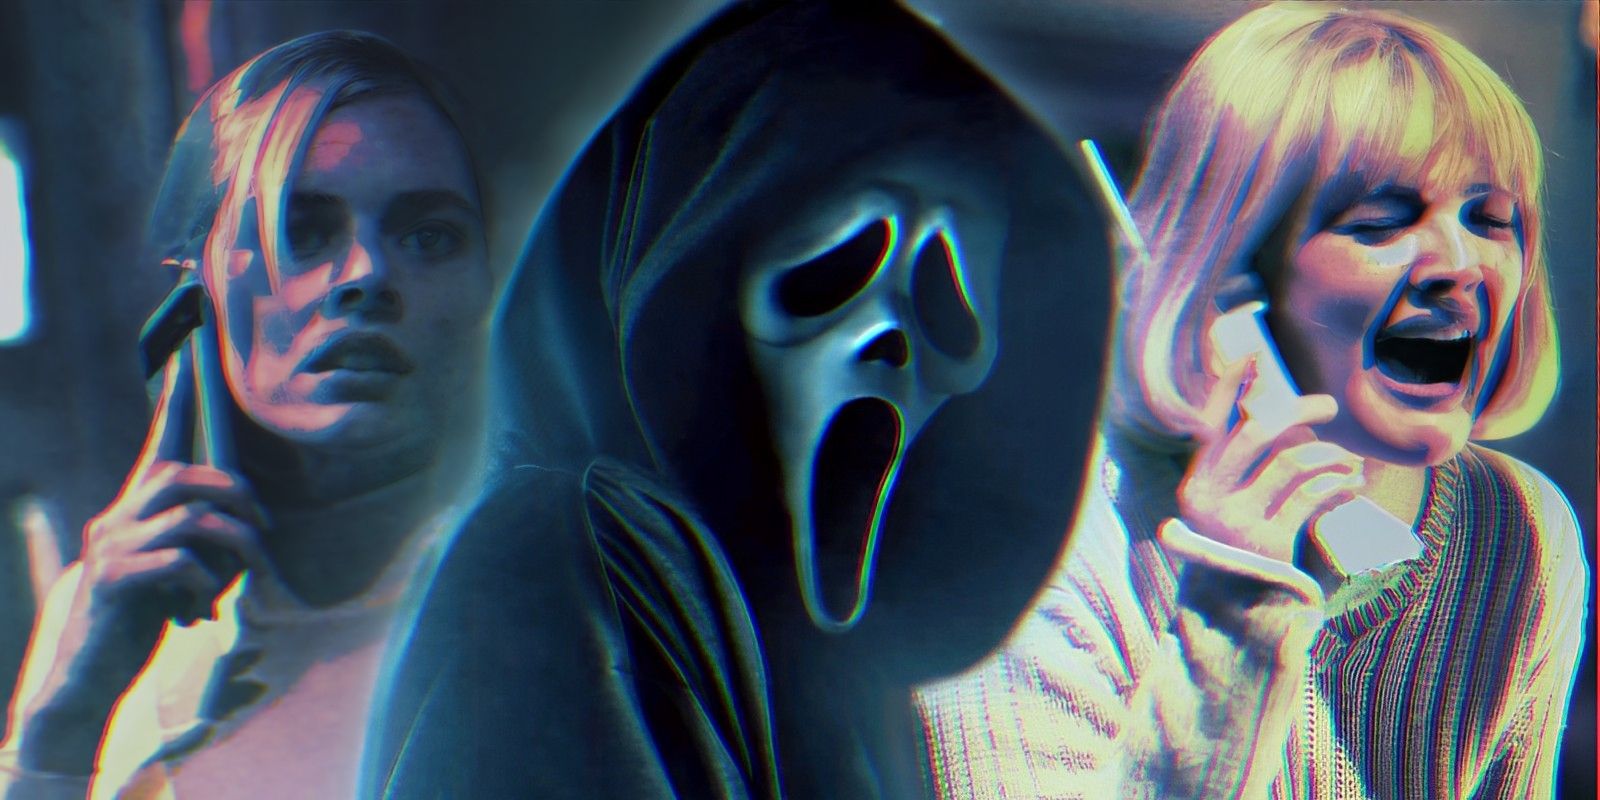 Scream 6’s Laura Crane and Scream’s Casey Becker alongside Ghostface.